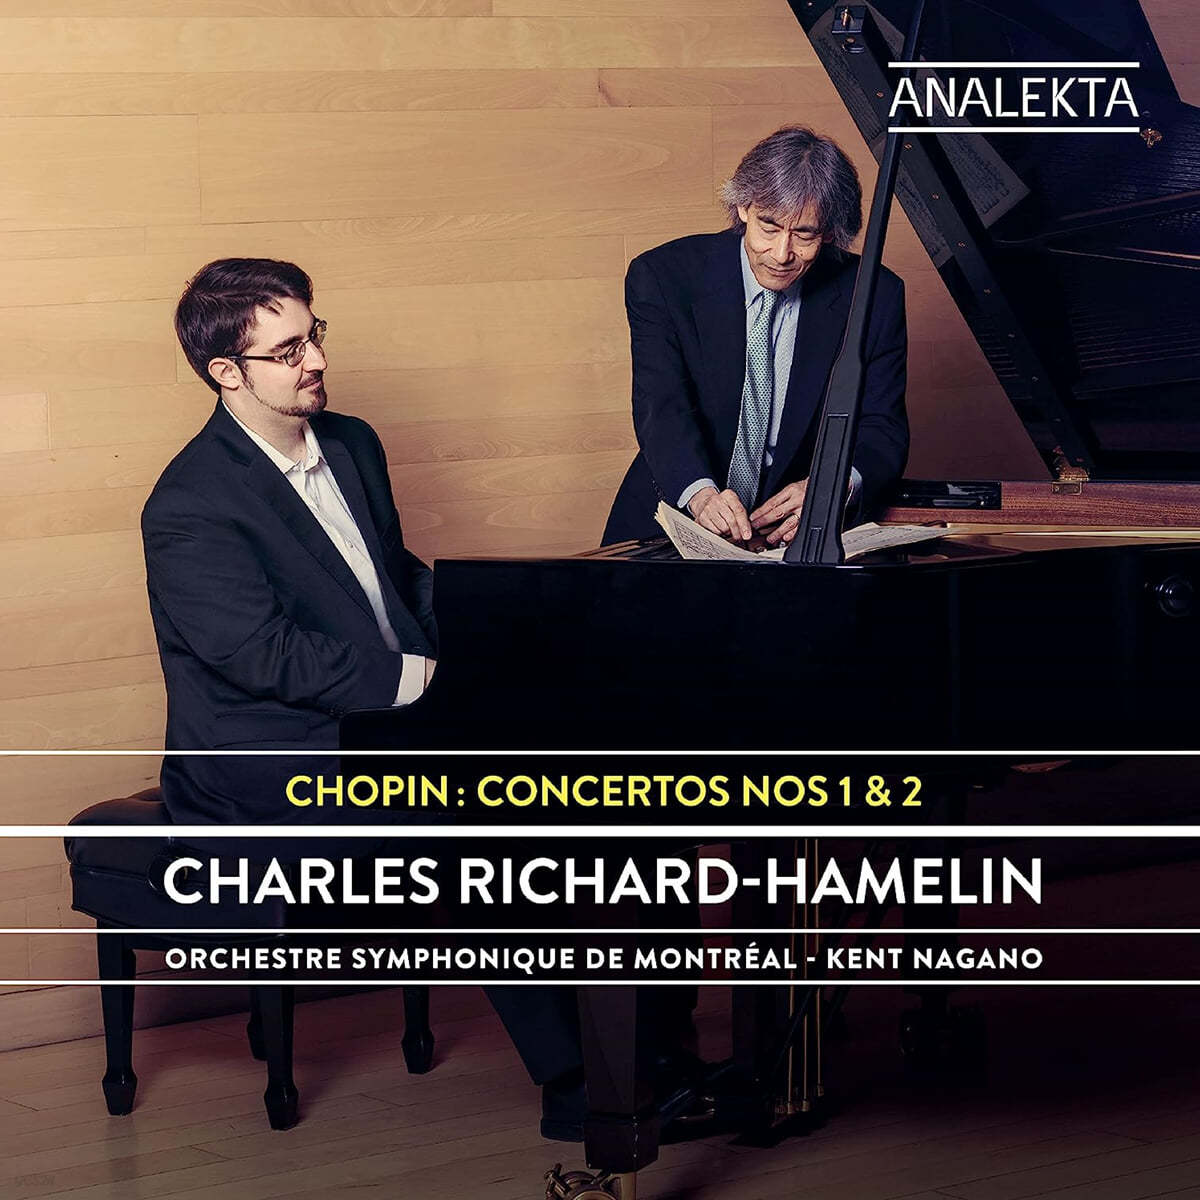 Charles Richard-Hamelin 쇼팽: 피아노 협주곡 1번, 2번 (Chopin: Piano Concertos)